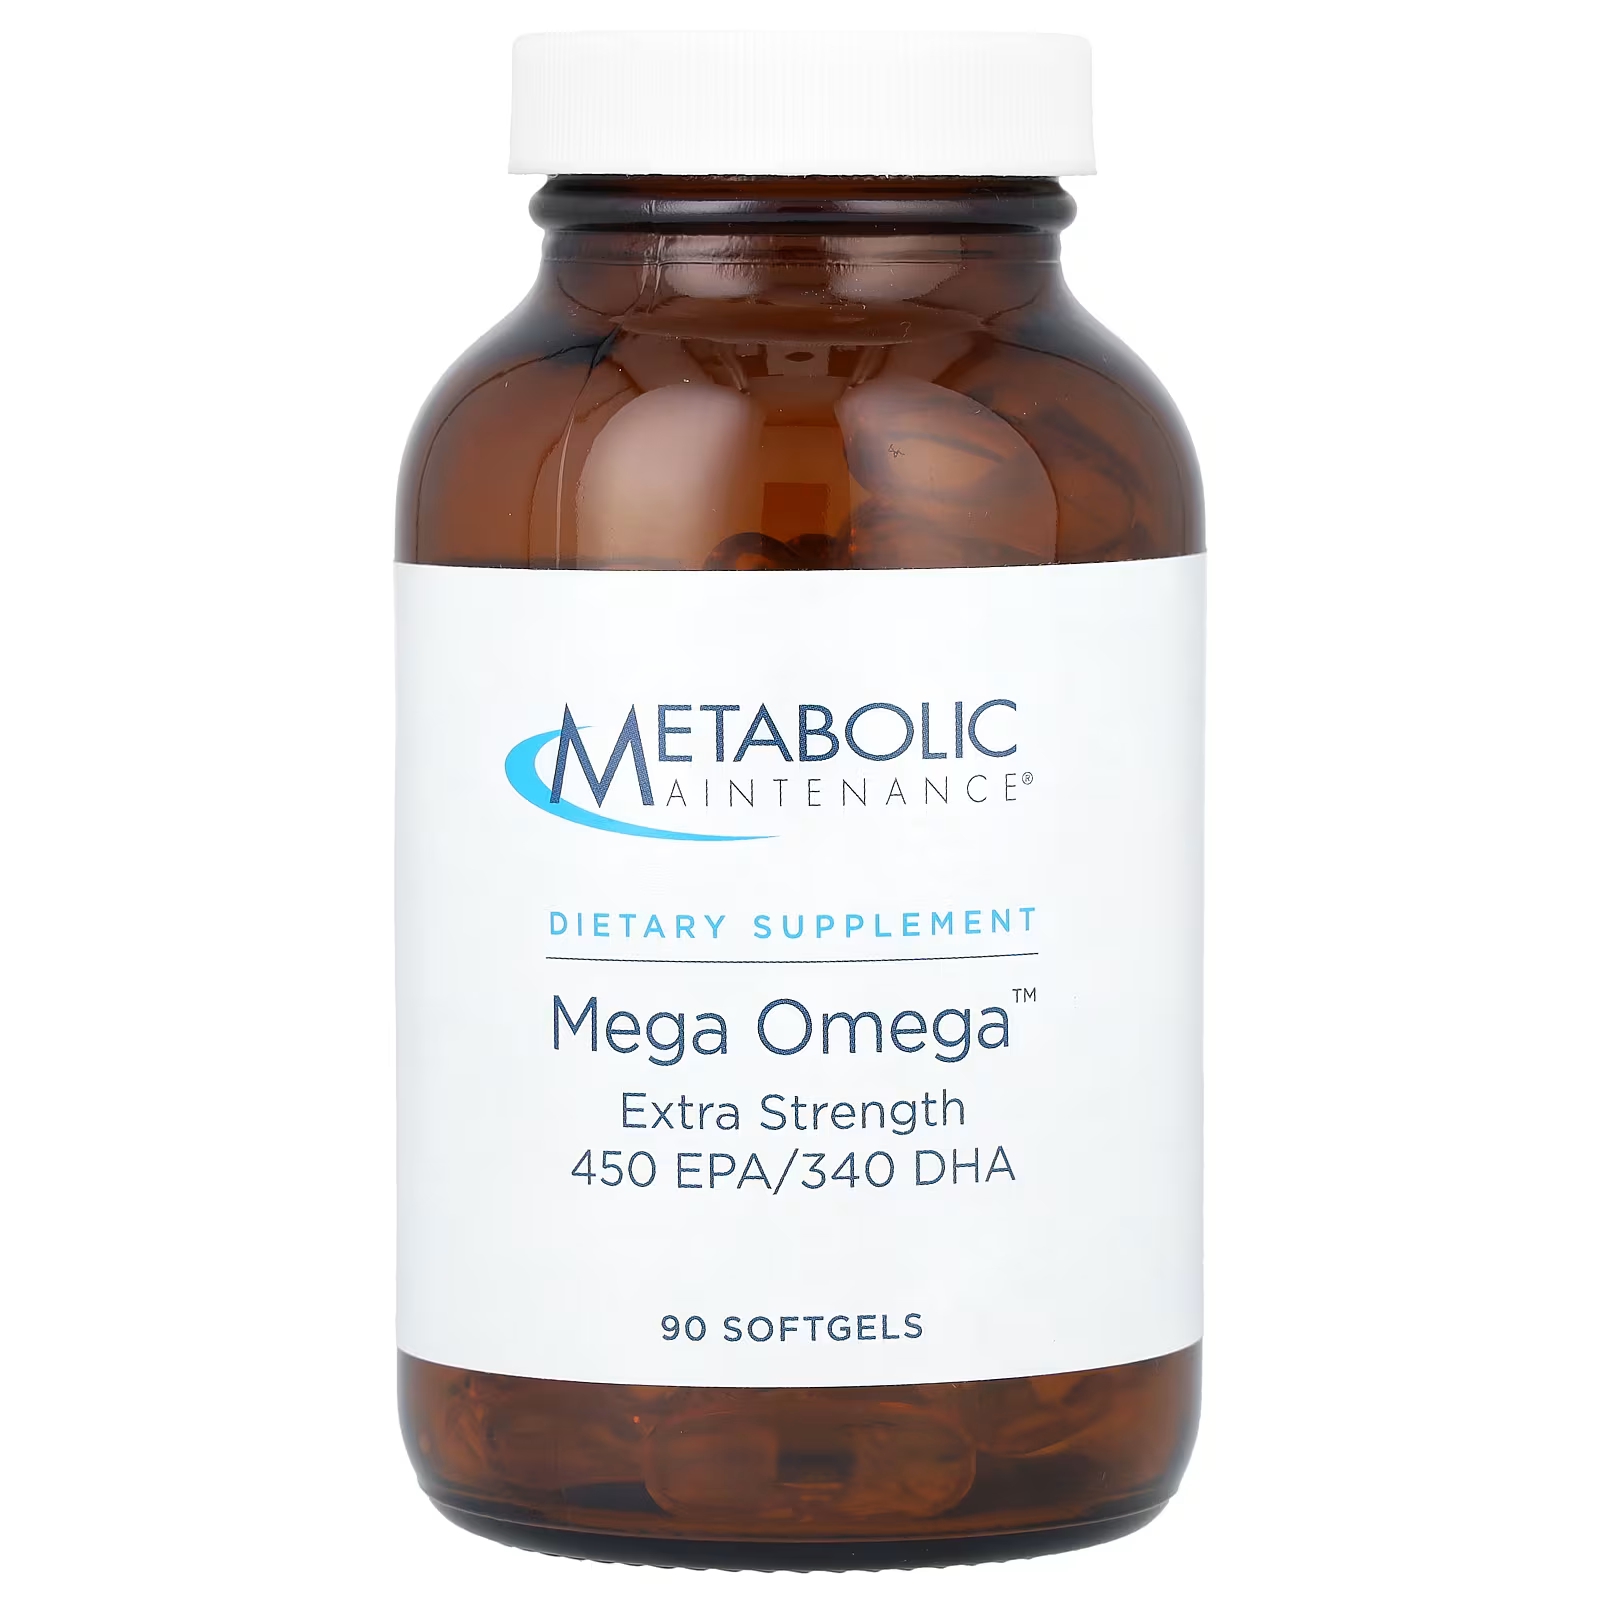 Метаболическое обслуживание Mega Omega Extra Strength, 90 мягких таблеток Metabolic Maintenance метаболическое обслуживание the big one без железа 90 капсул metabolic maintenance